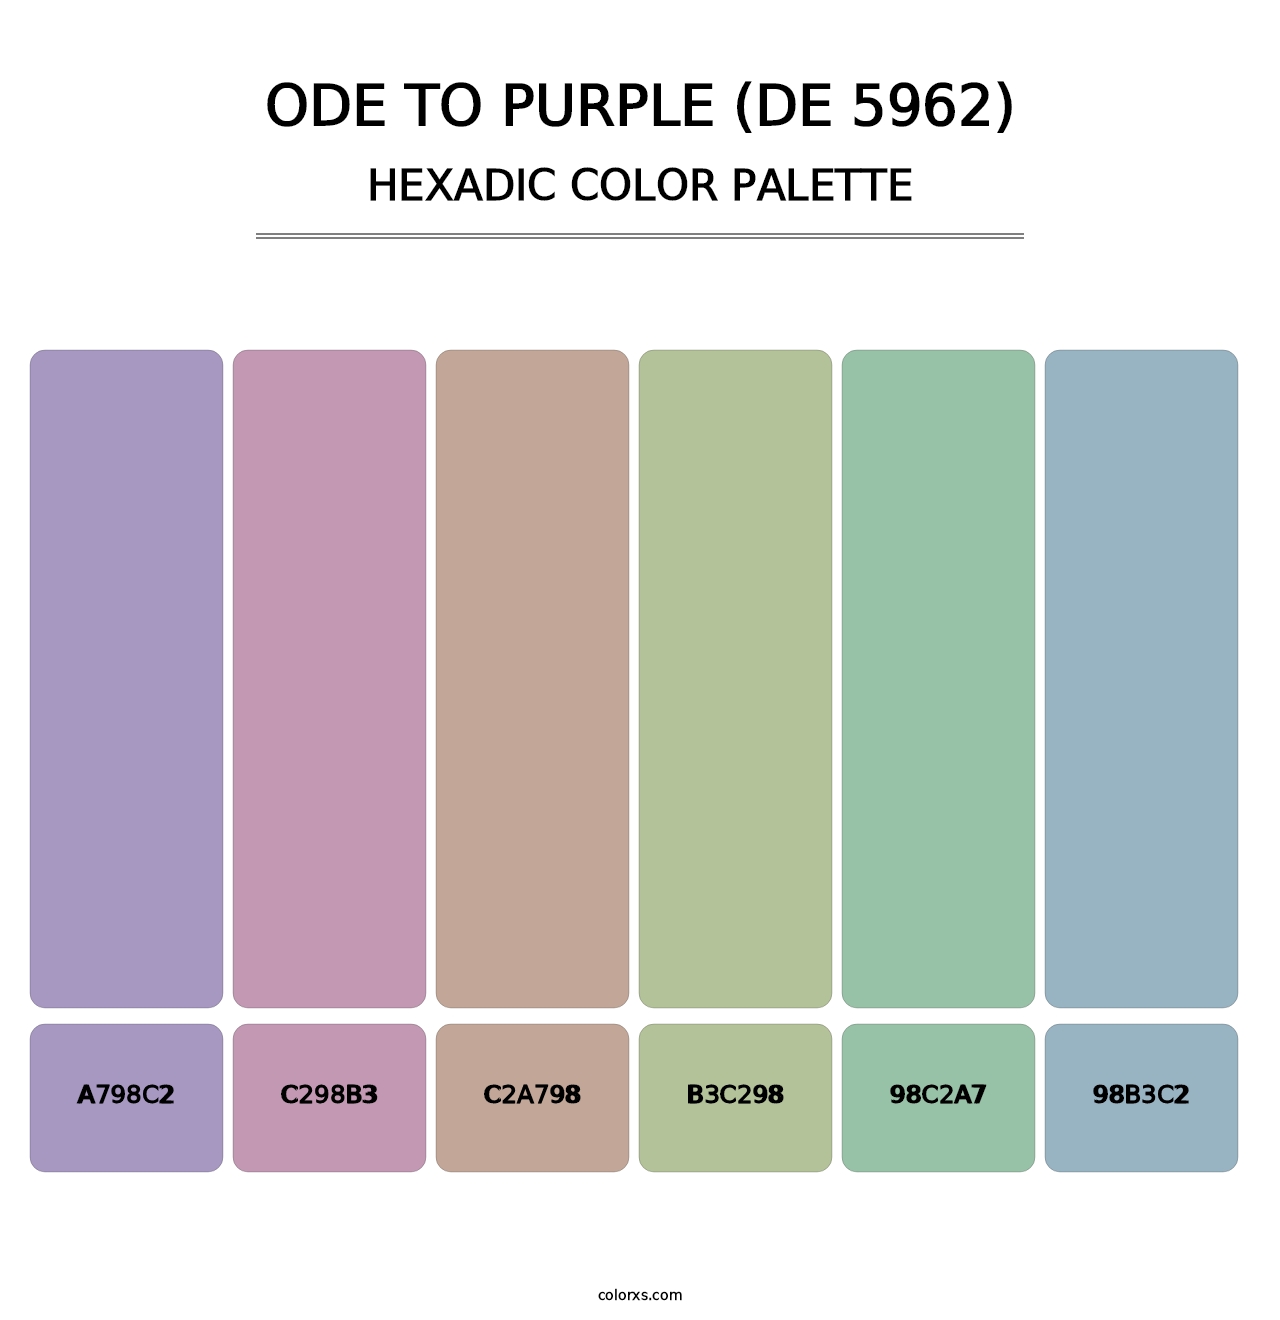 Ode to Purple (DE 5962) - Hexadic Color Palette